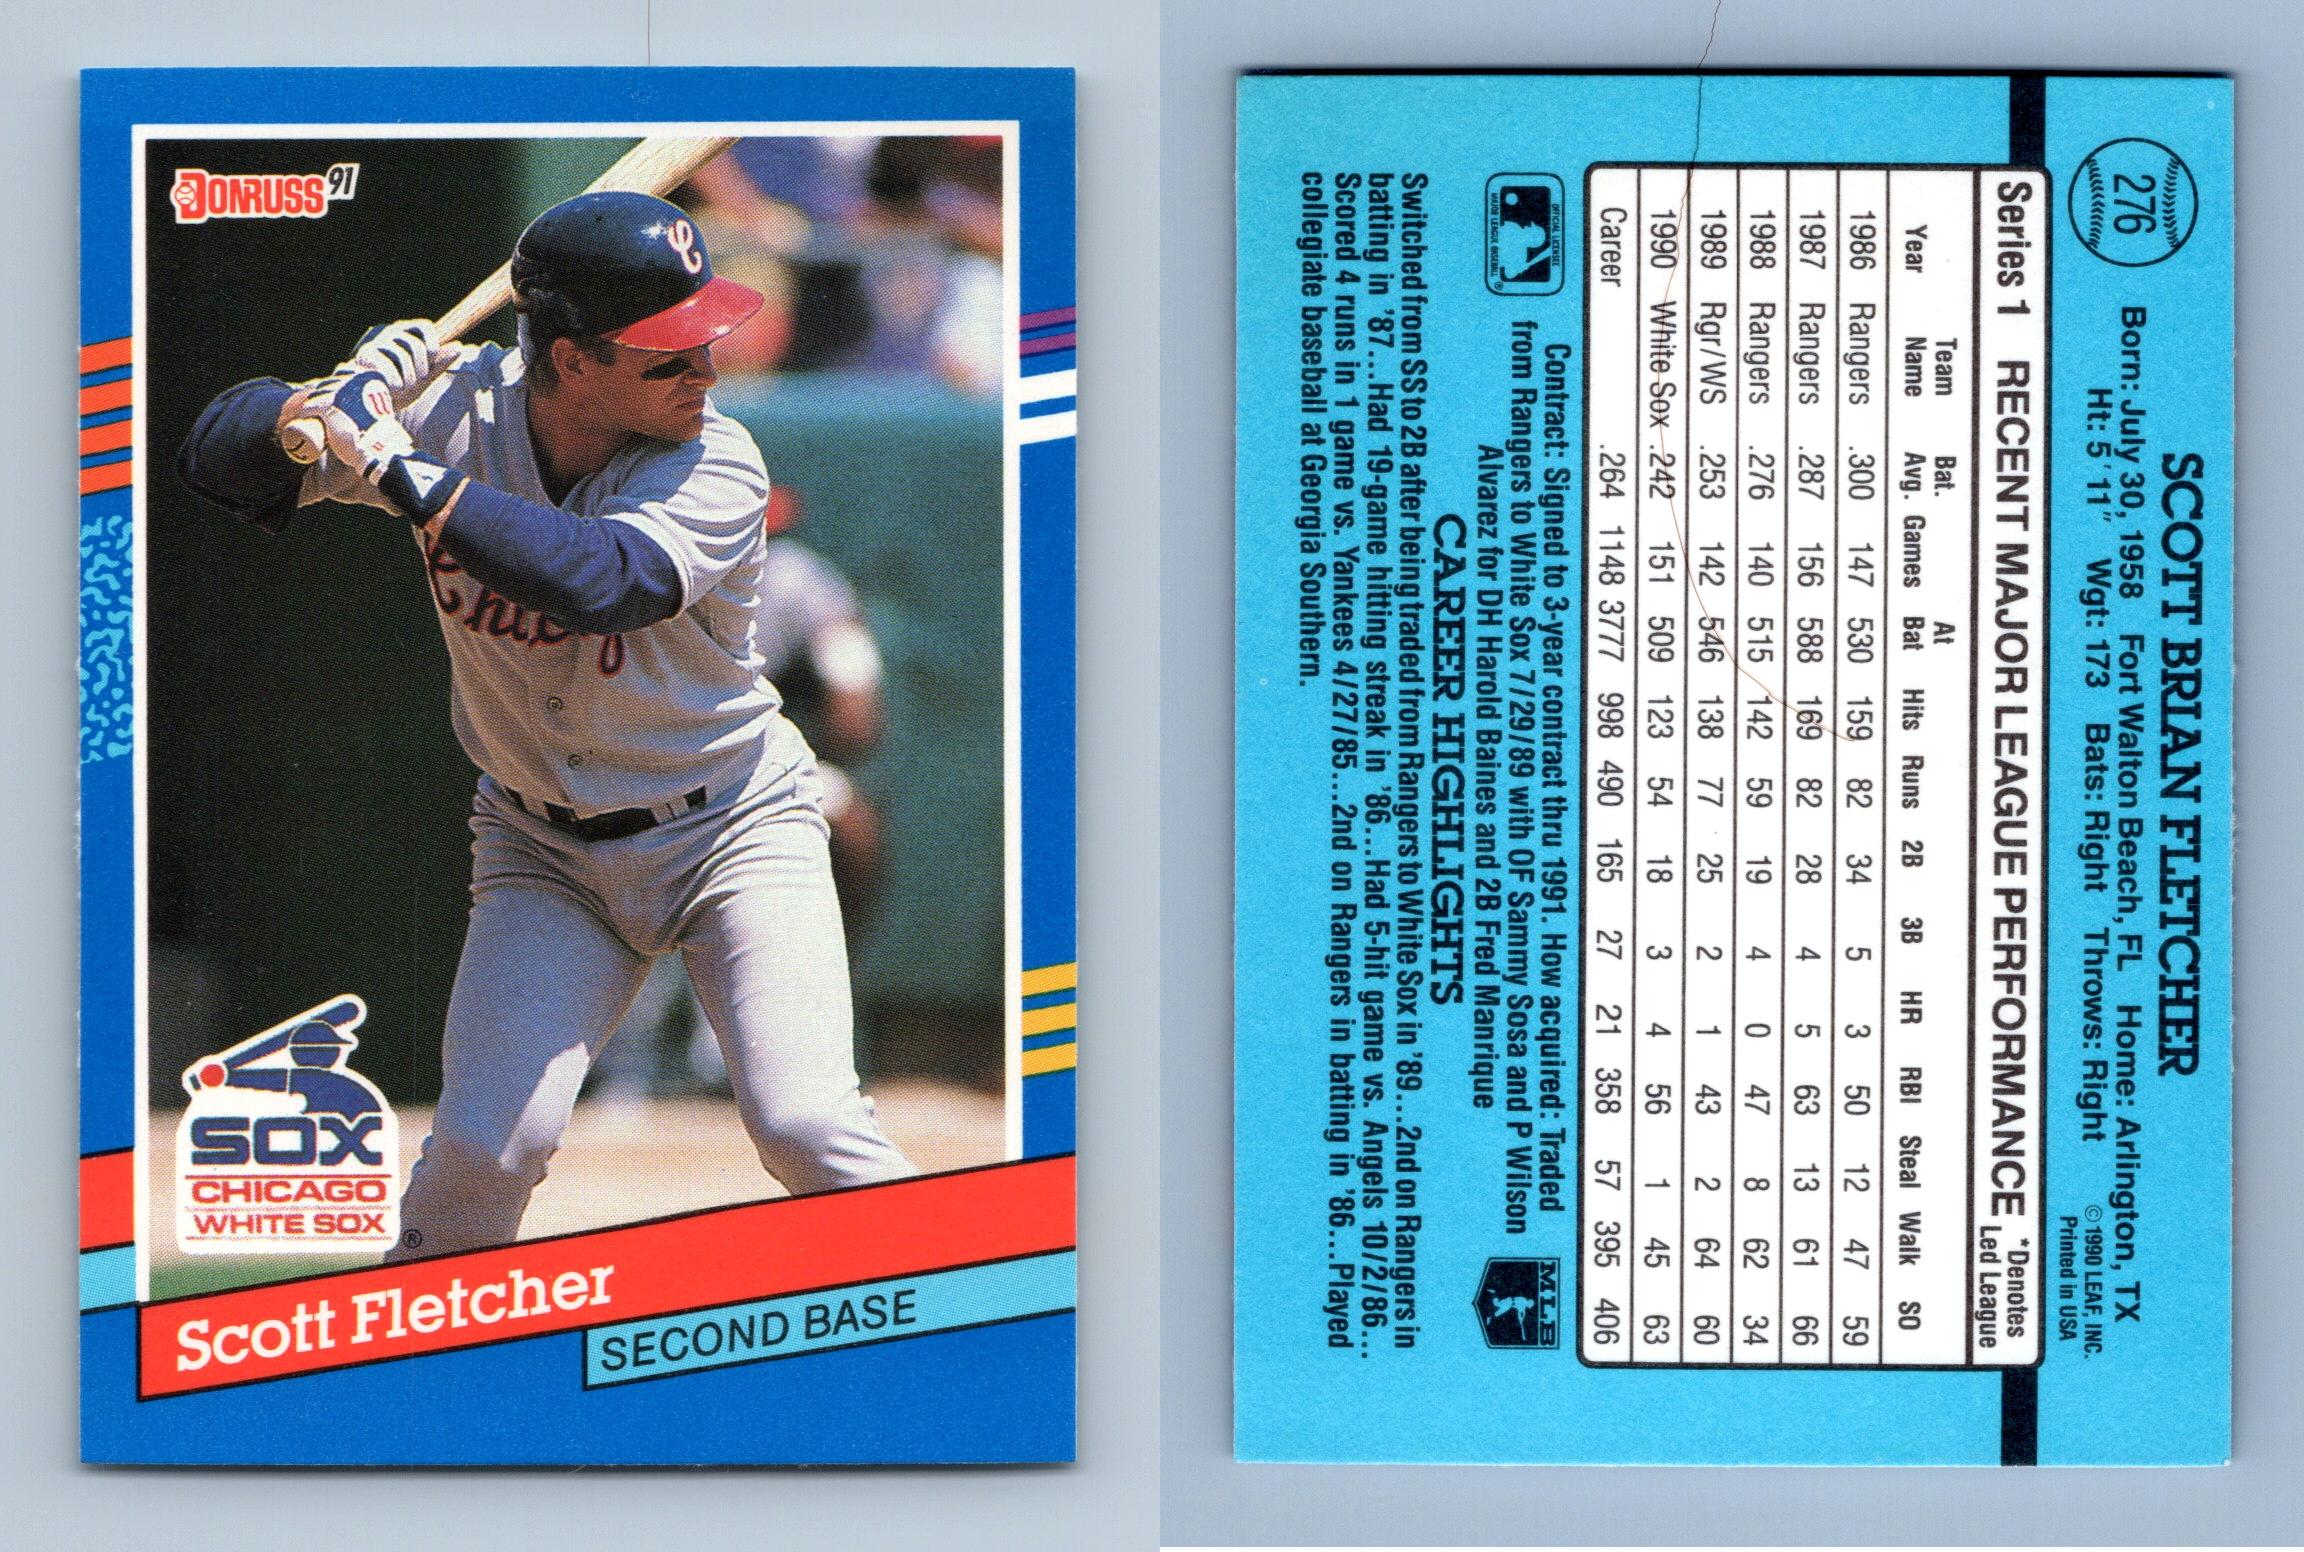 1991 Donruss Pat Borders Toronto Blue Jay's Baseball Card #317